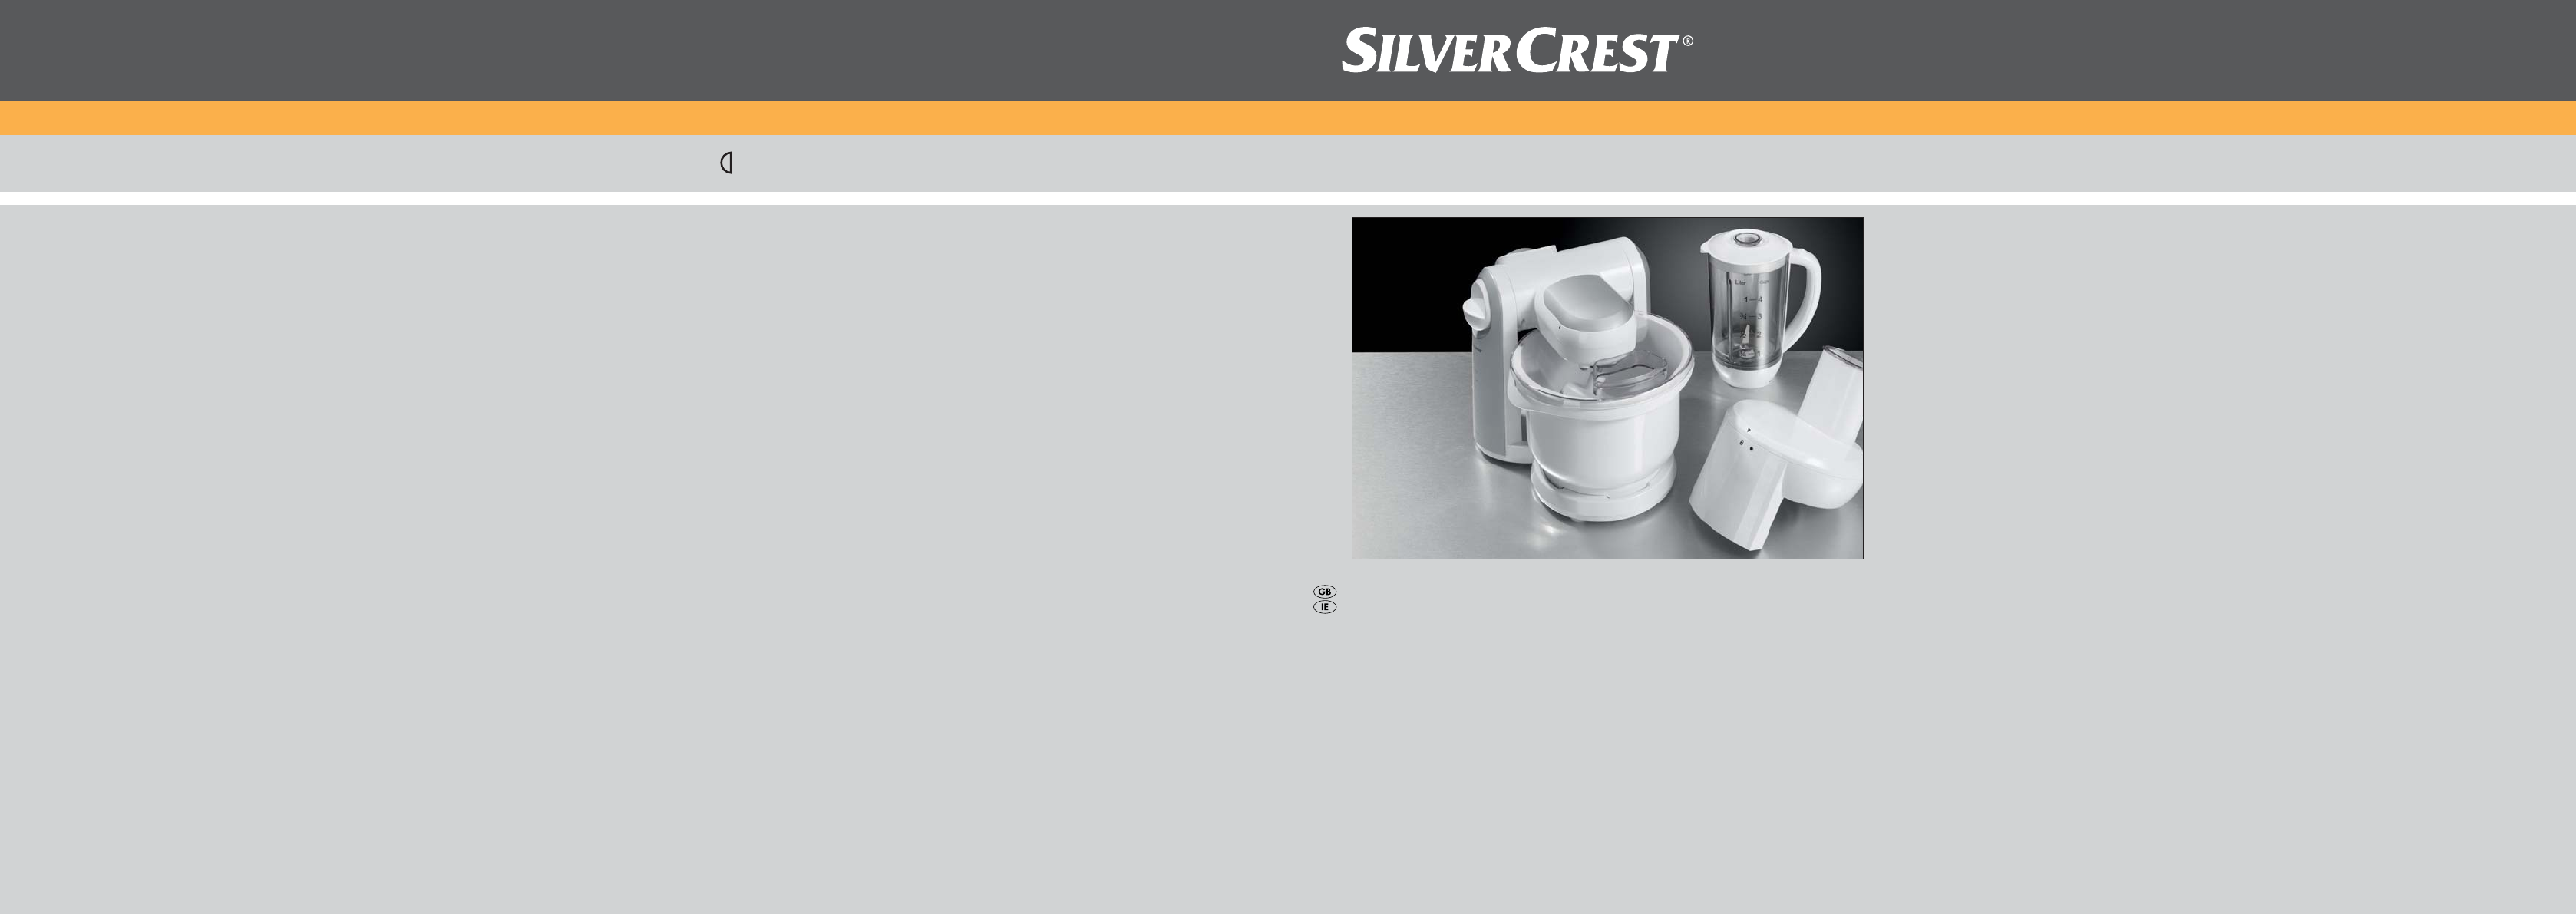 Silvercrest SDM 1500 A1 Operating Instructions Manual